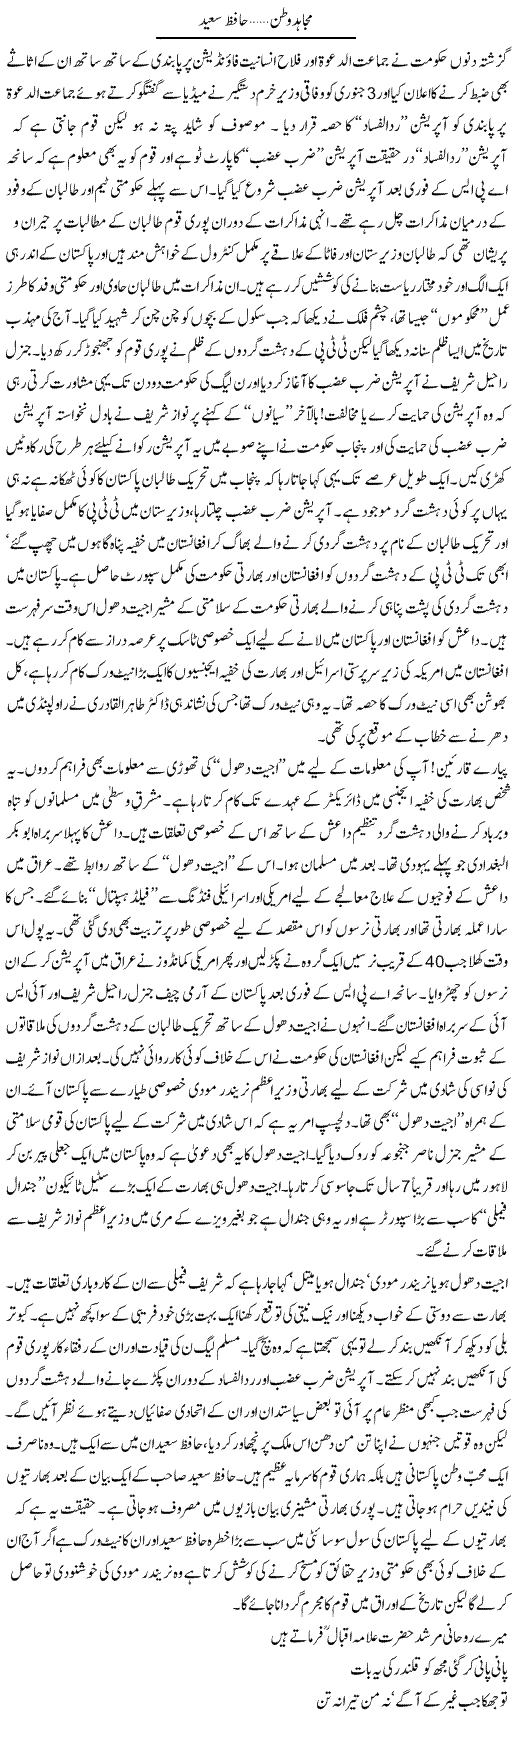 Mujahid Watan, Hafiz Saeed | Nadeem Chaudhry | Daily Urdu Columns